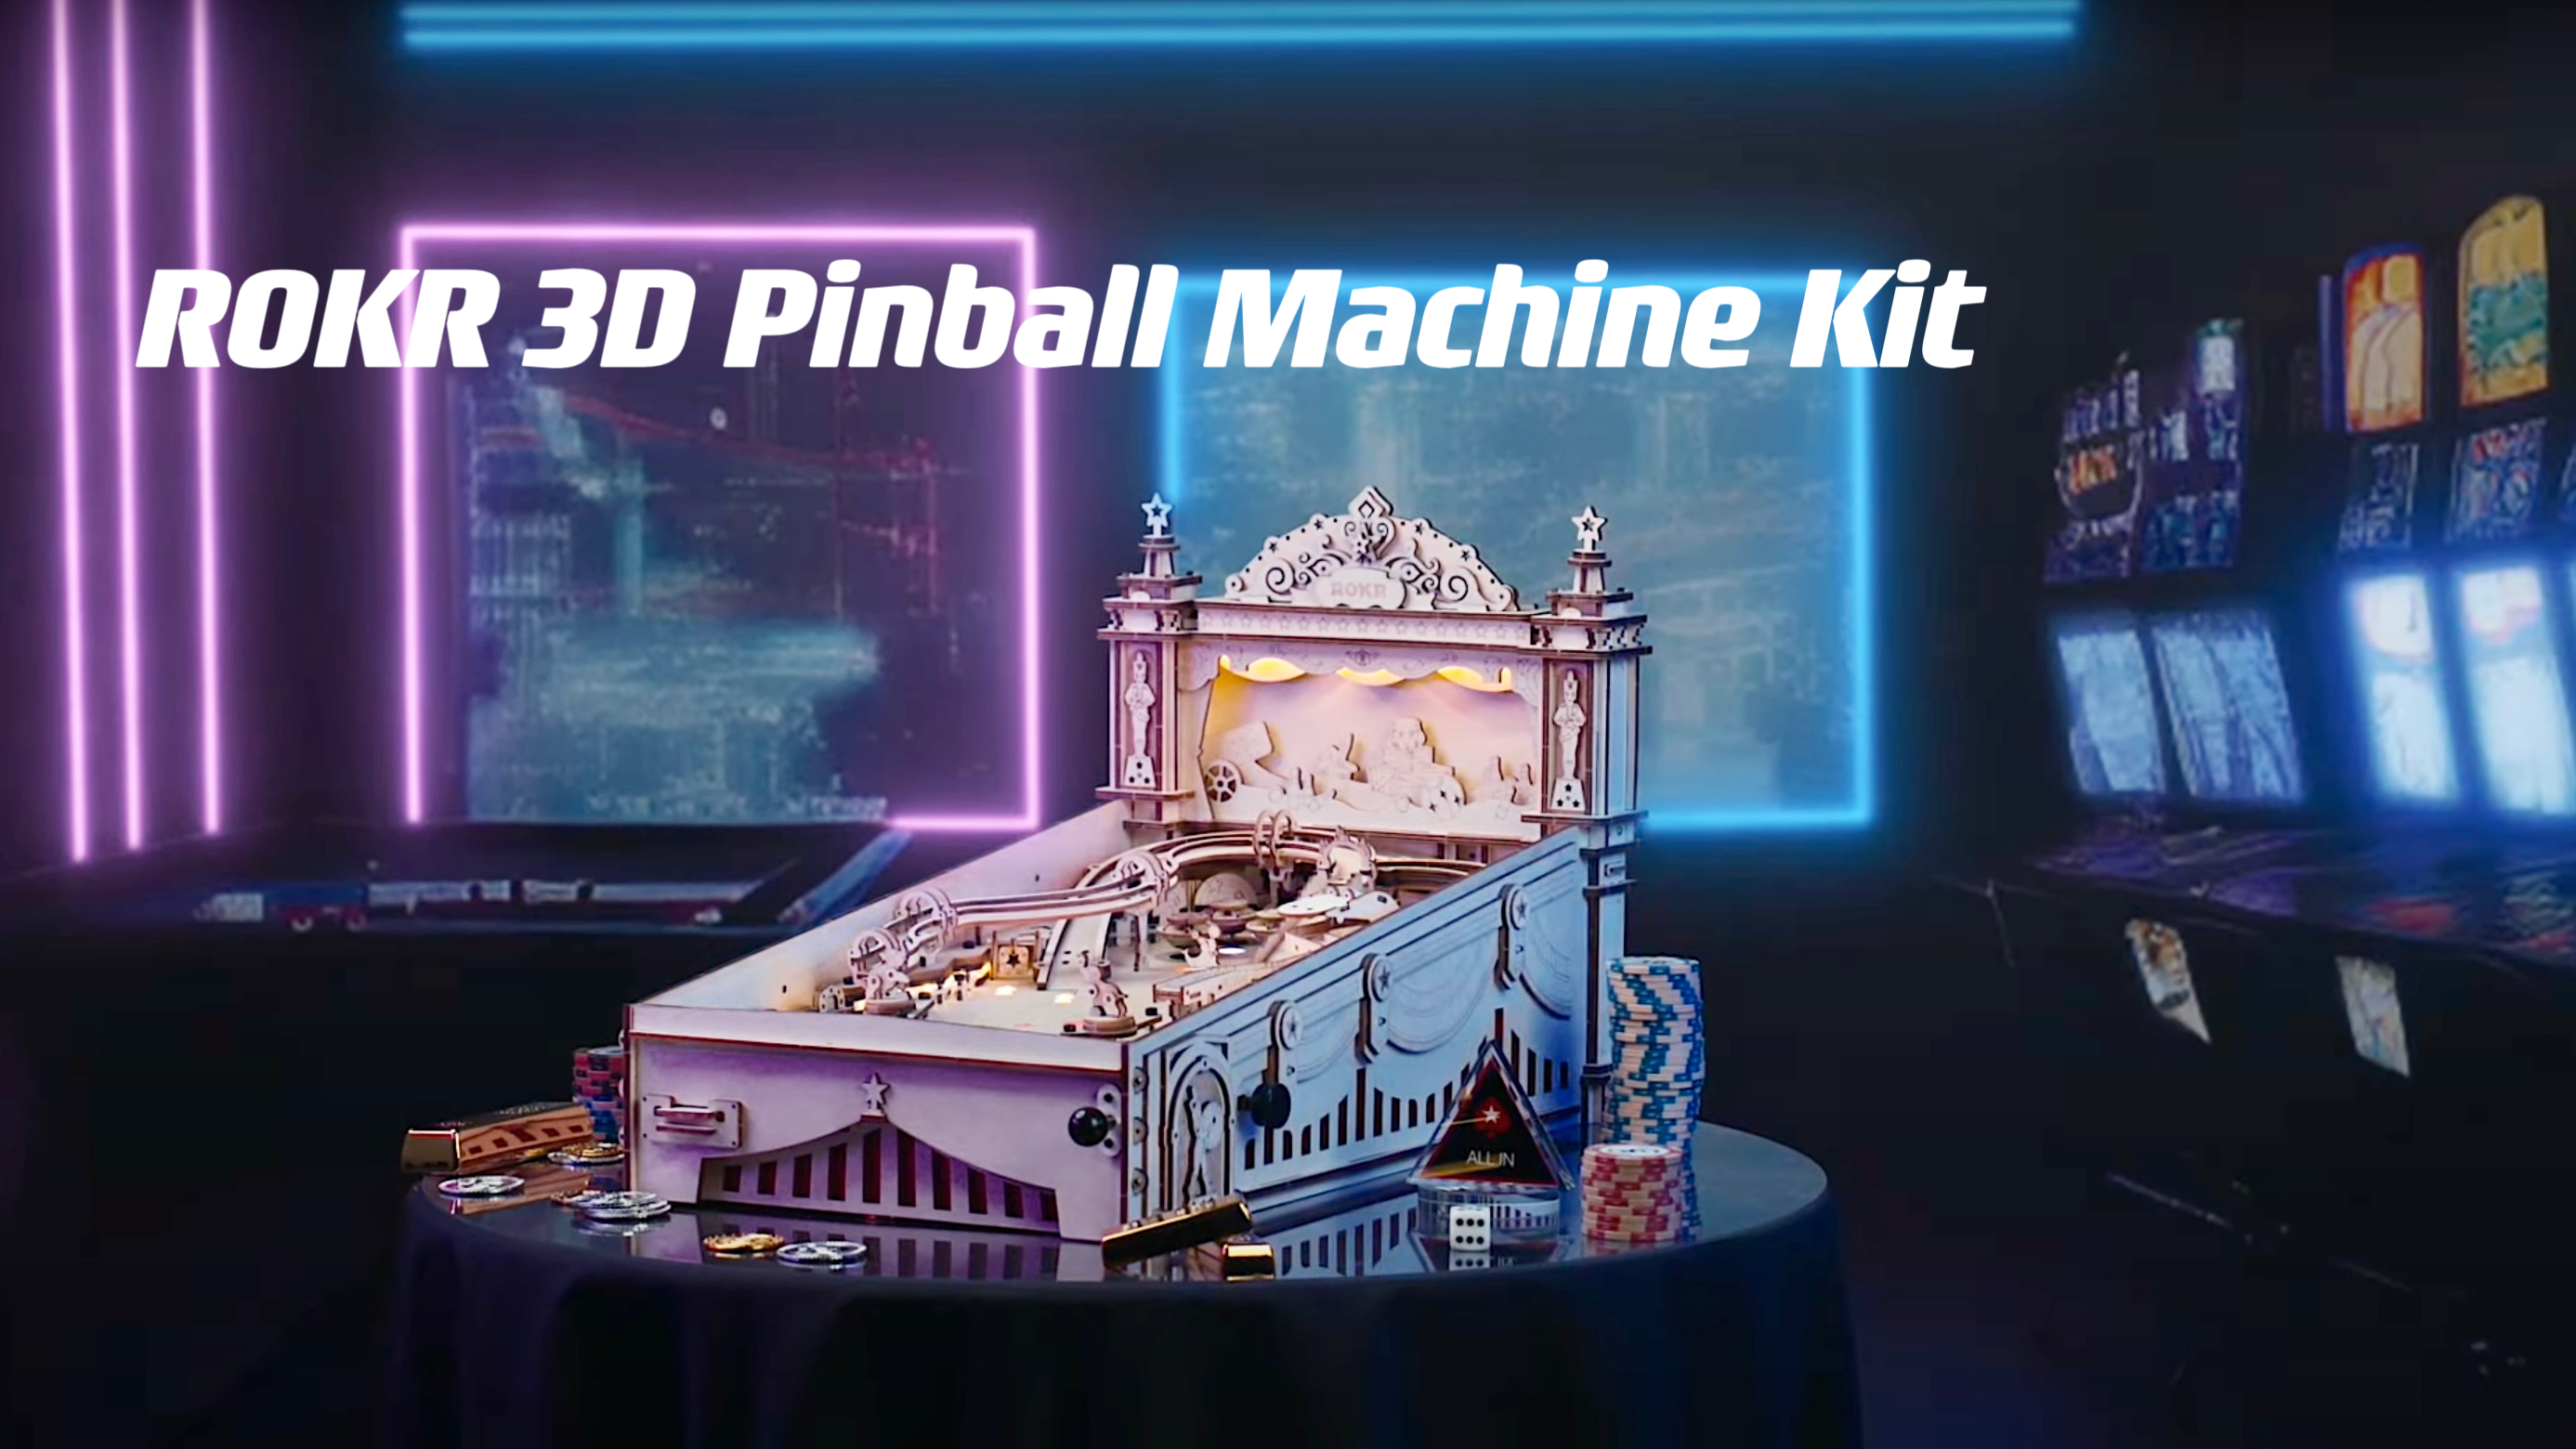 Mechancal 3D Pinball DIY Puzzle Kit – RunIt Decks